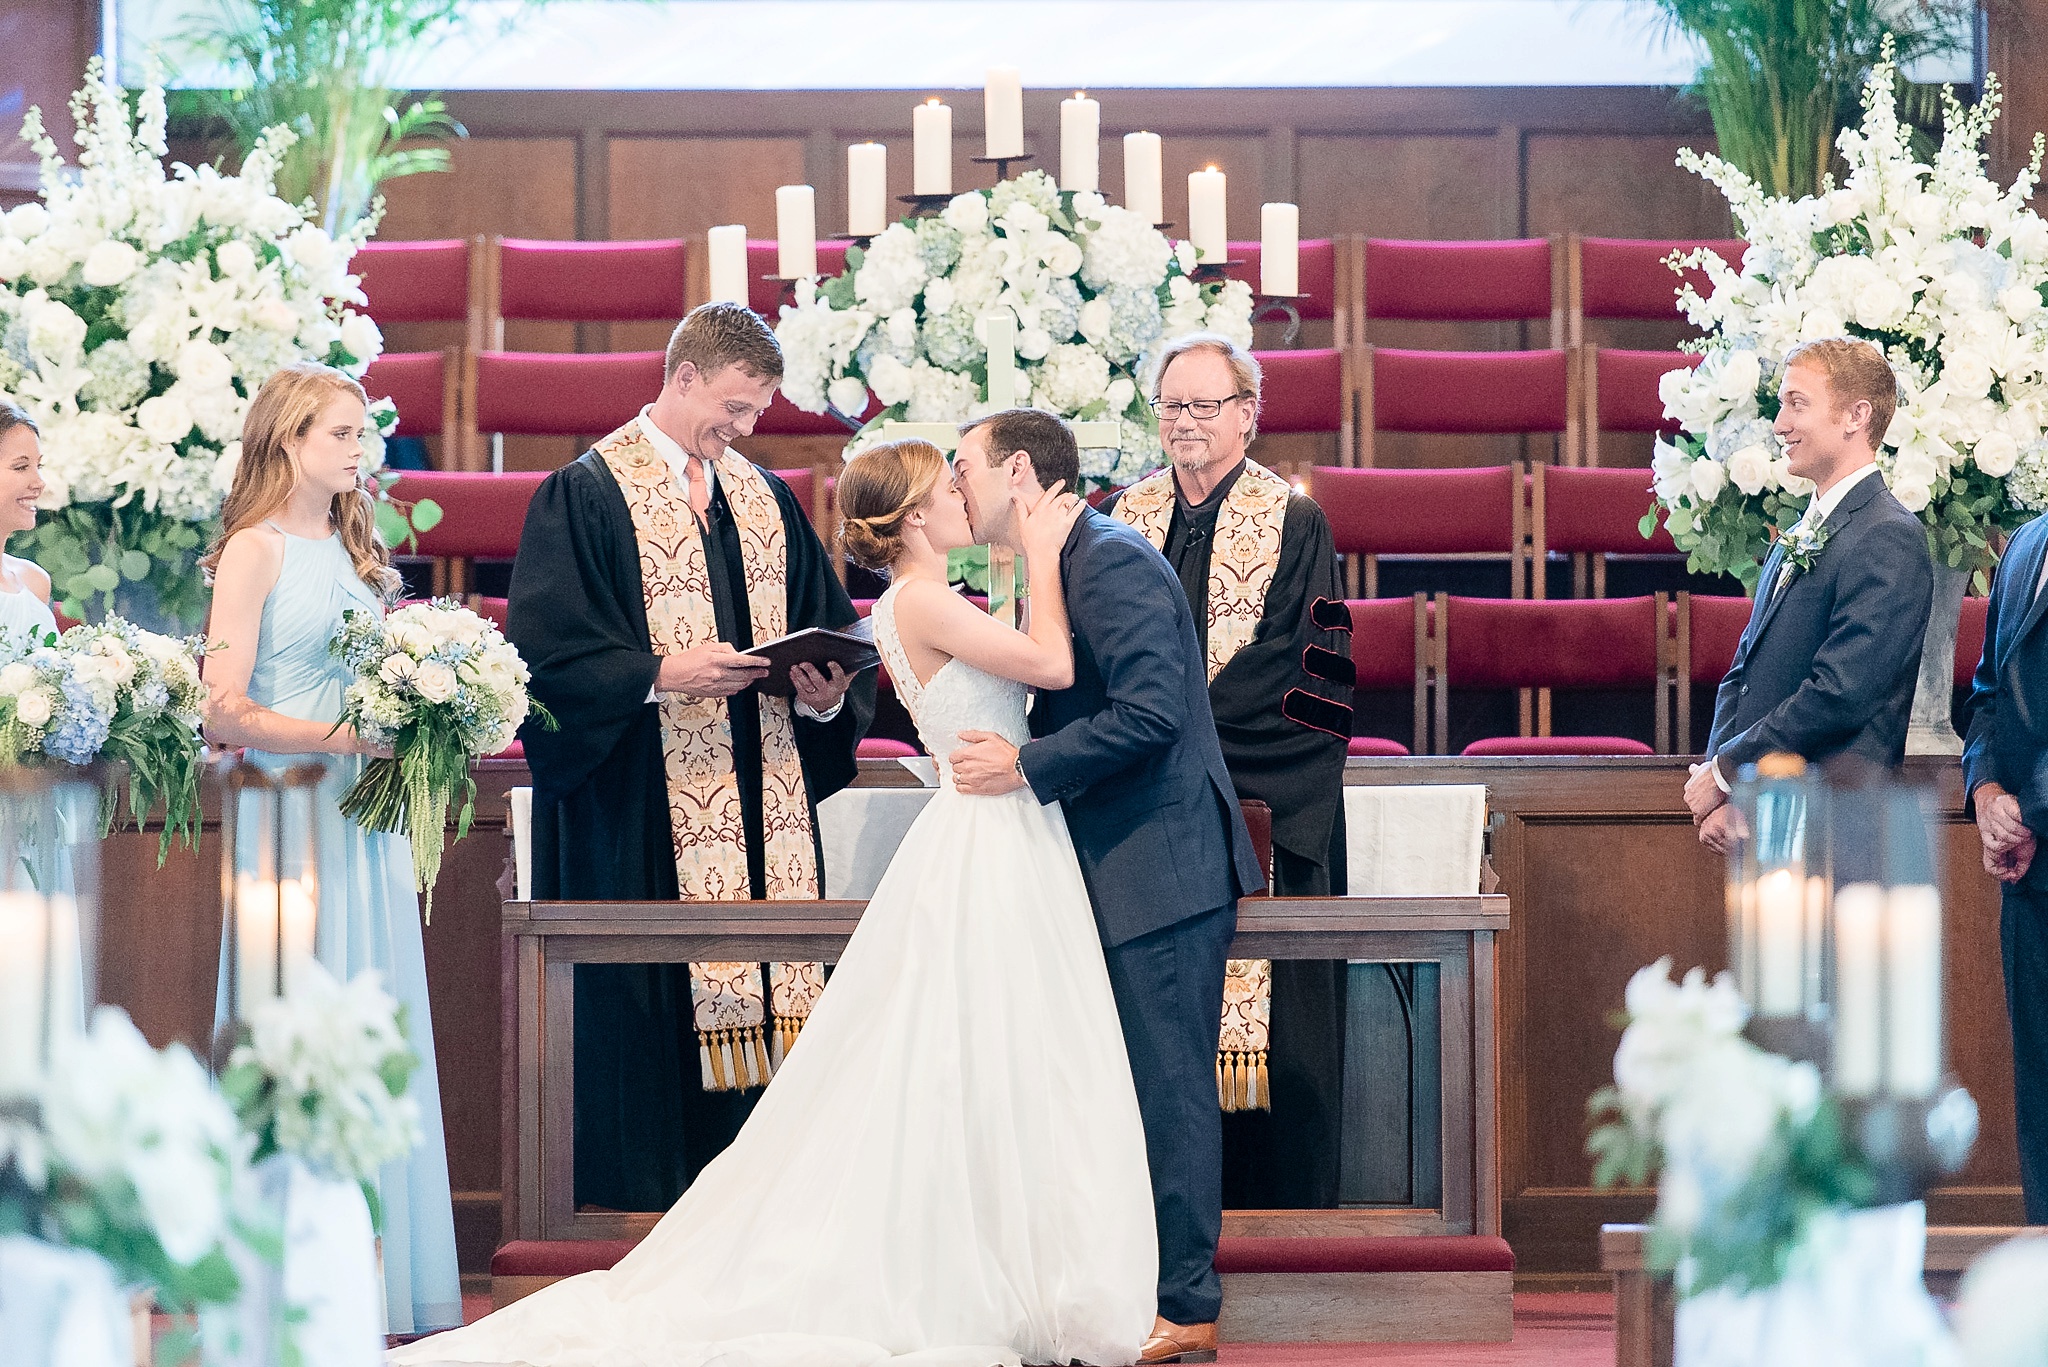 Aldridge Gardens Riverchase United Methodist Hoover Wedding | Birmingham Alabama Wedding Photographer_0050.jpg